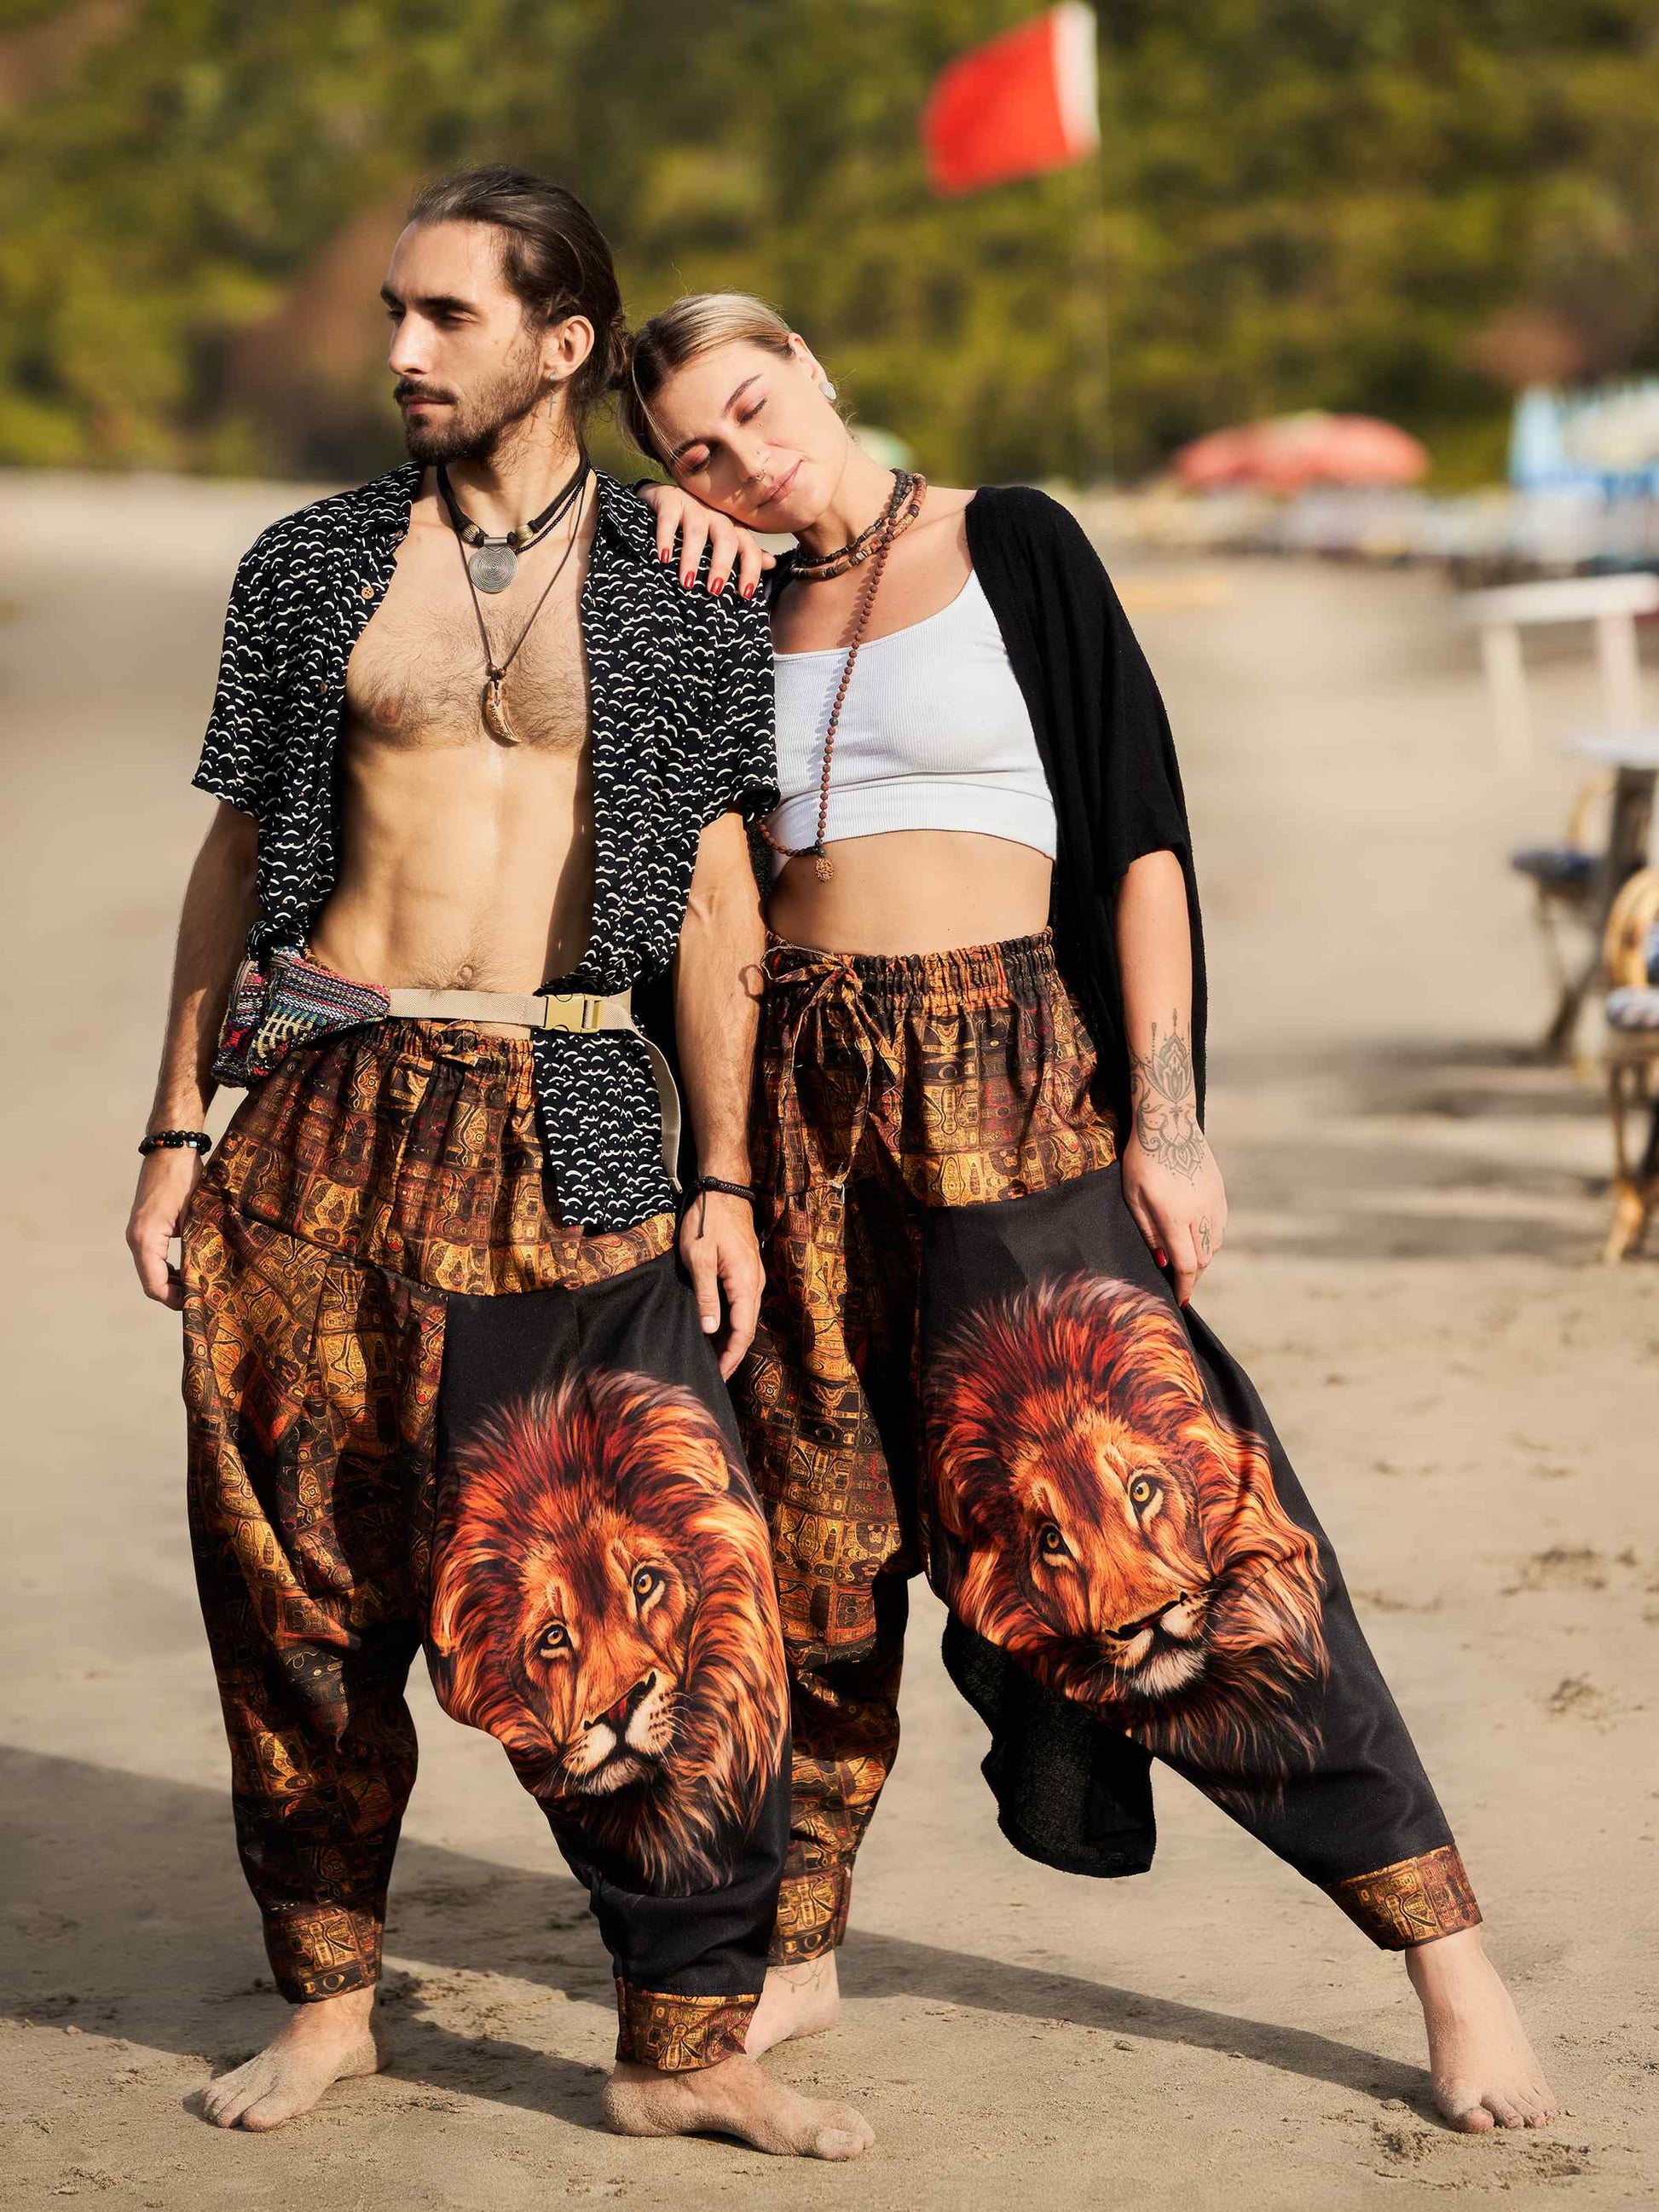 Buy Unisex Couple Lion Animal Print Hippy Boho Harem Pants For Yoga Dance Travel